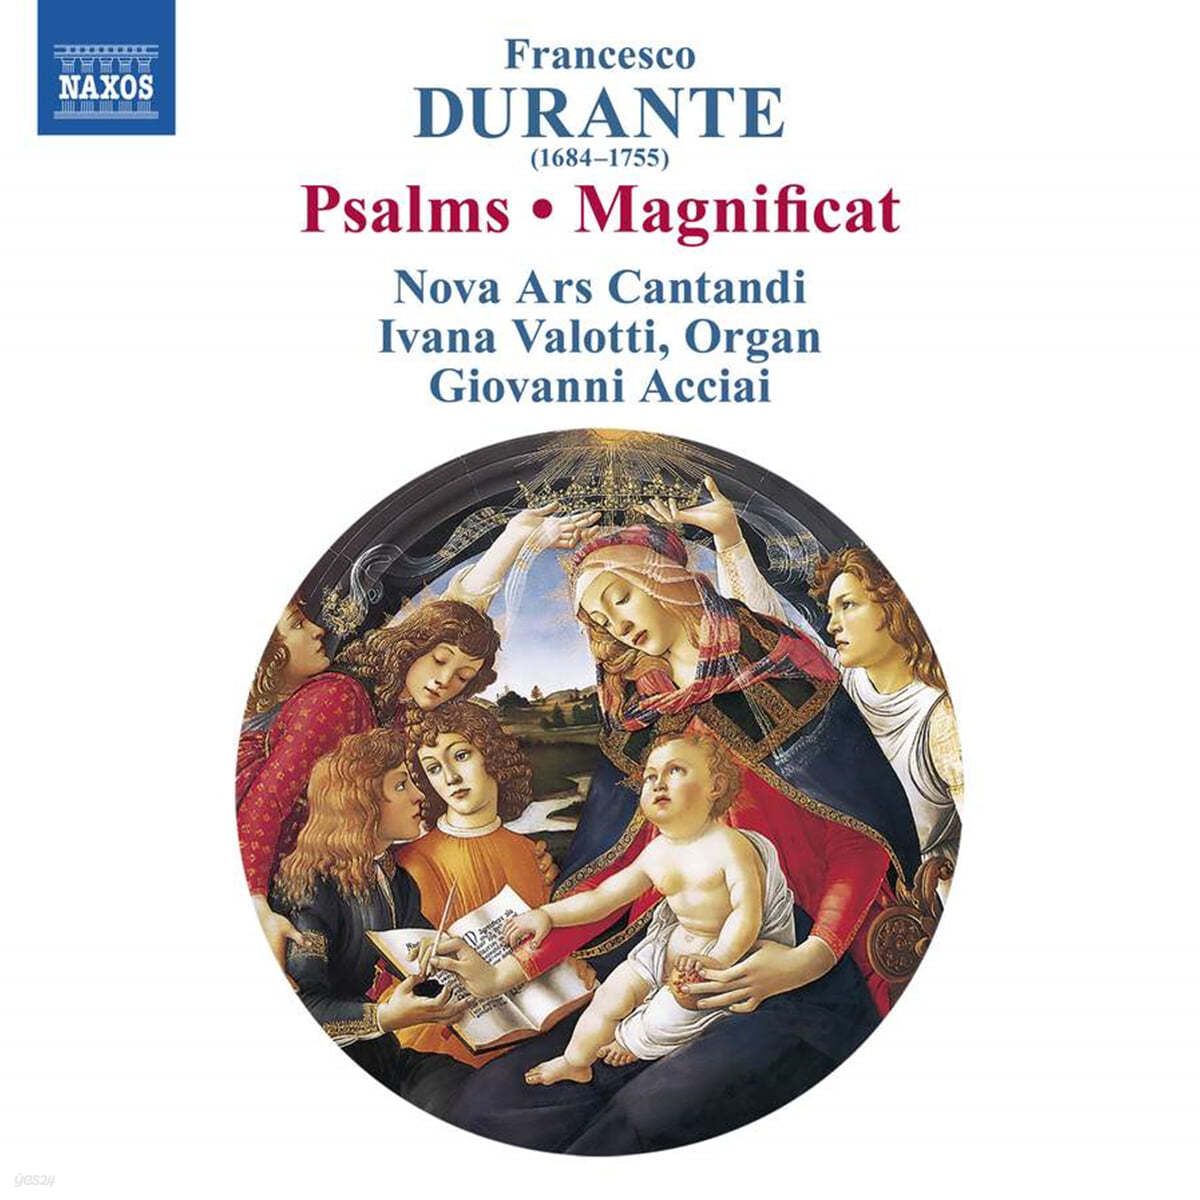 Giovanni Acciai 프란체스코 두란테: 시편과 마니피카트 (Francesco Durante: Psalms, Magnificat)